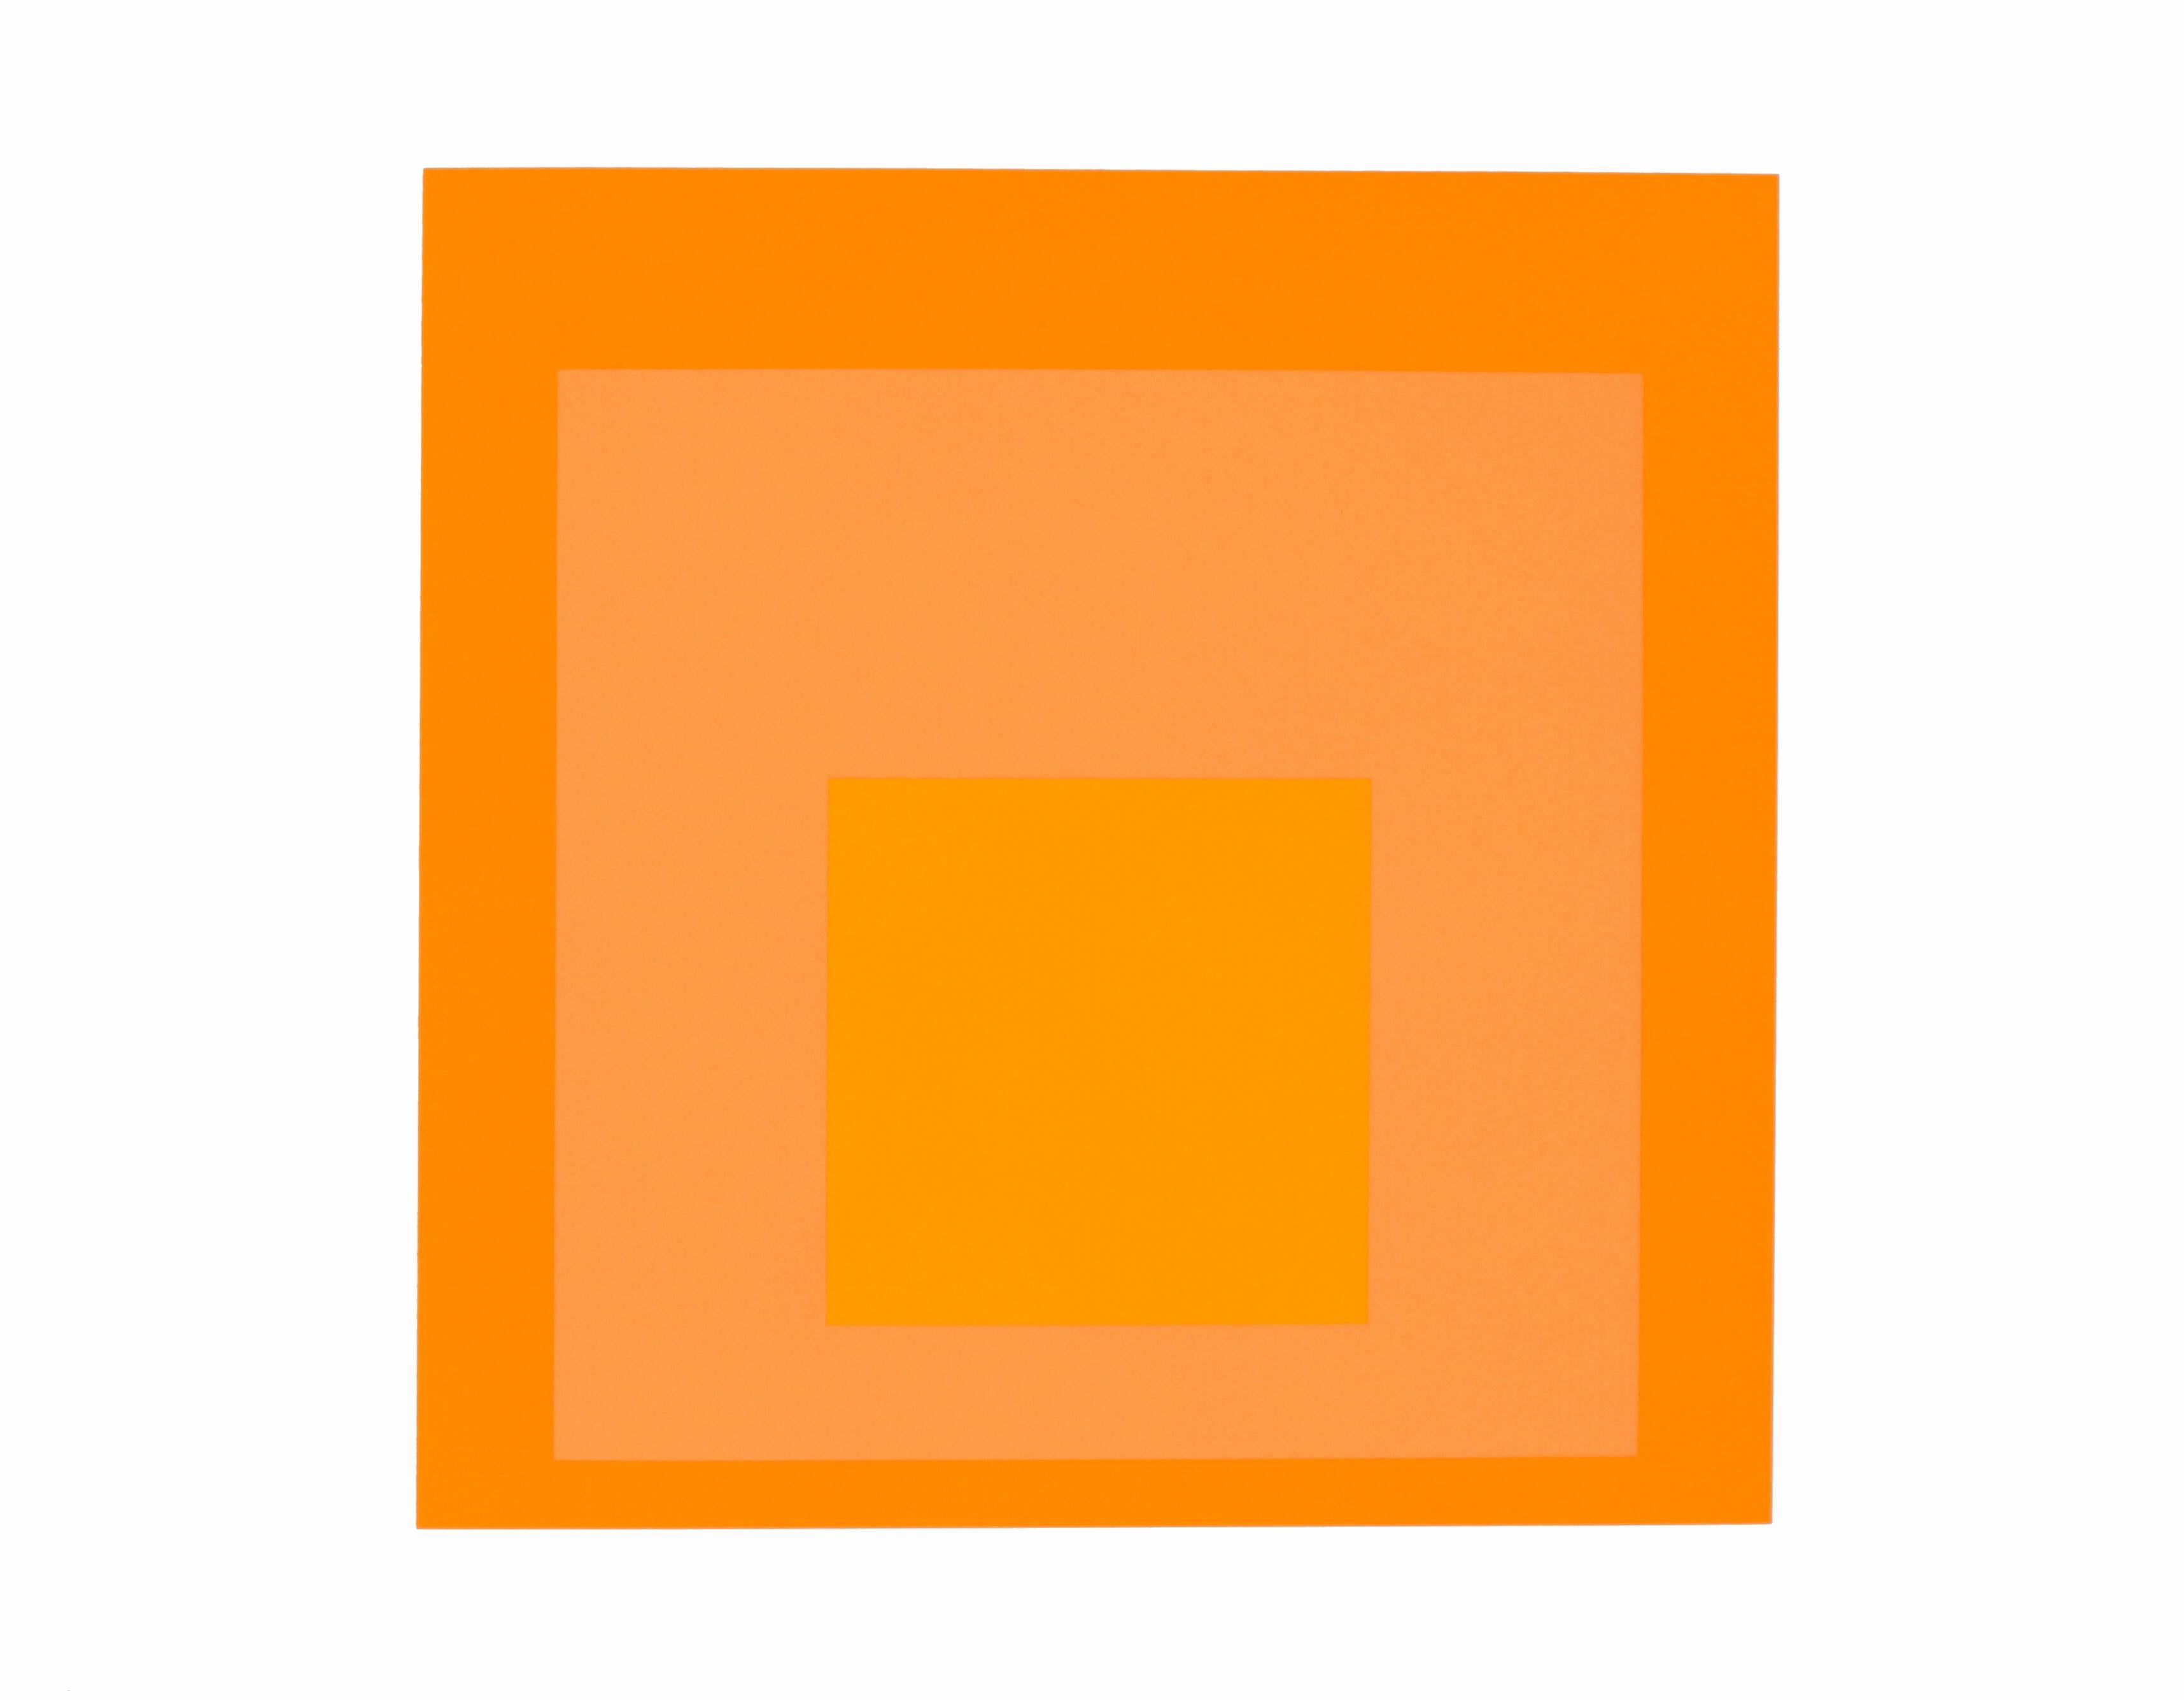 Formulation: Articulation, Portfolio II Folder 17 (B) "Homage to the Square"